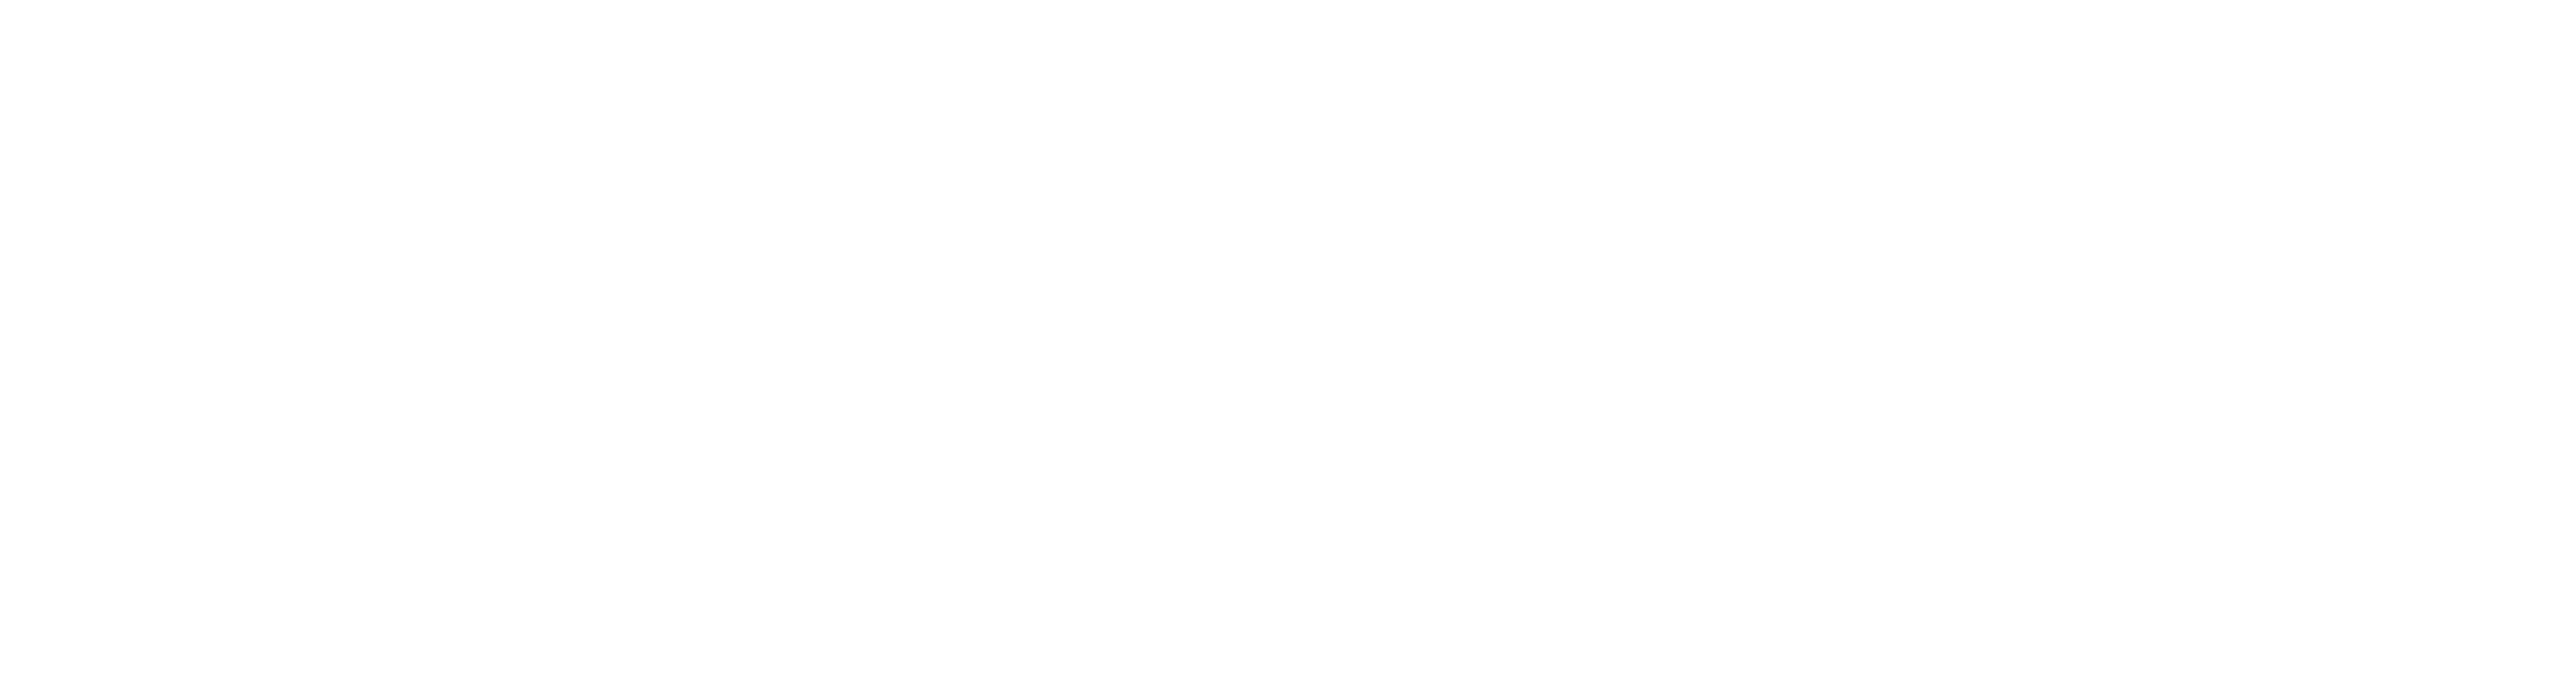 EU-Label Logo - Transparent Product QR Codes Platform